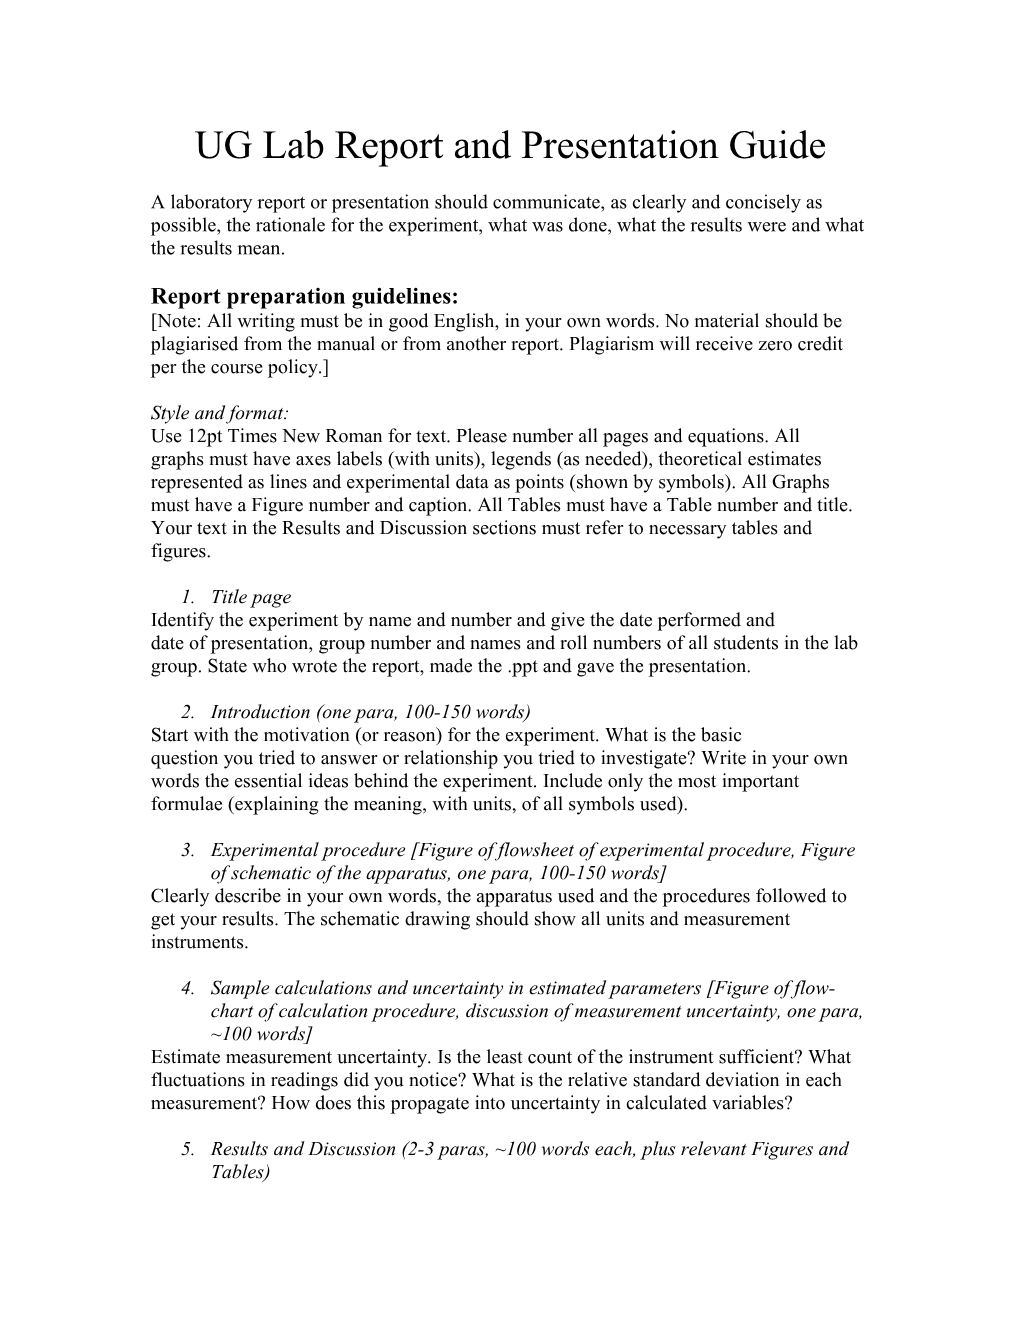 UG Lab Report and Presentation Guide